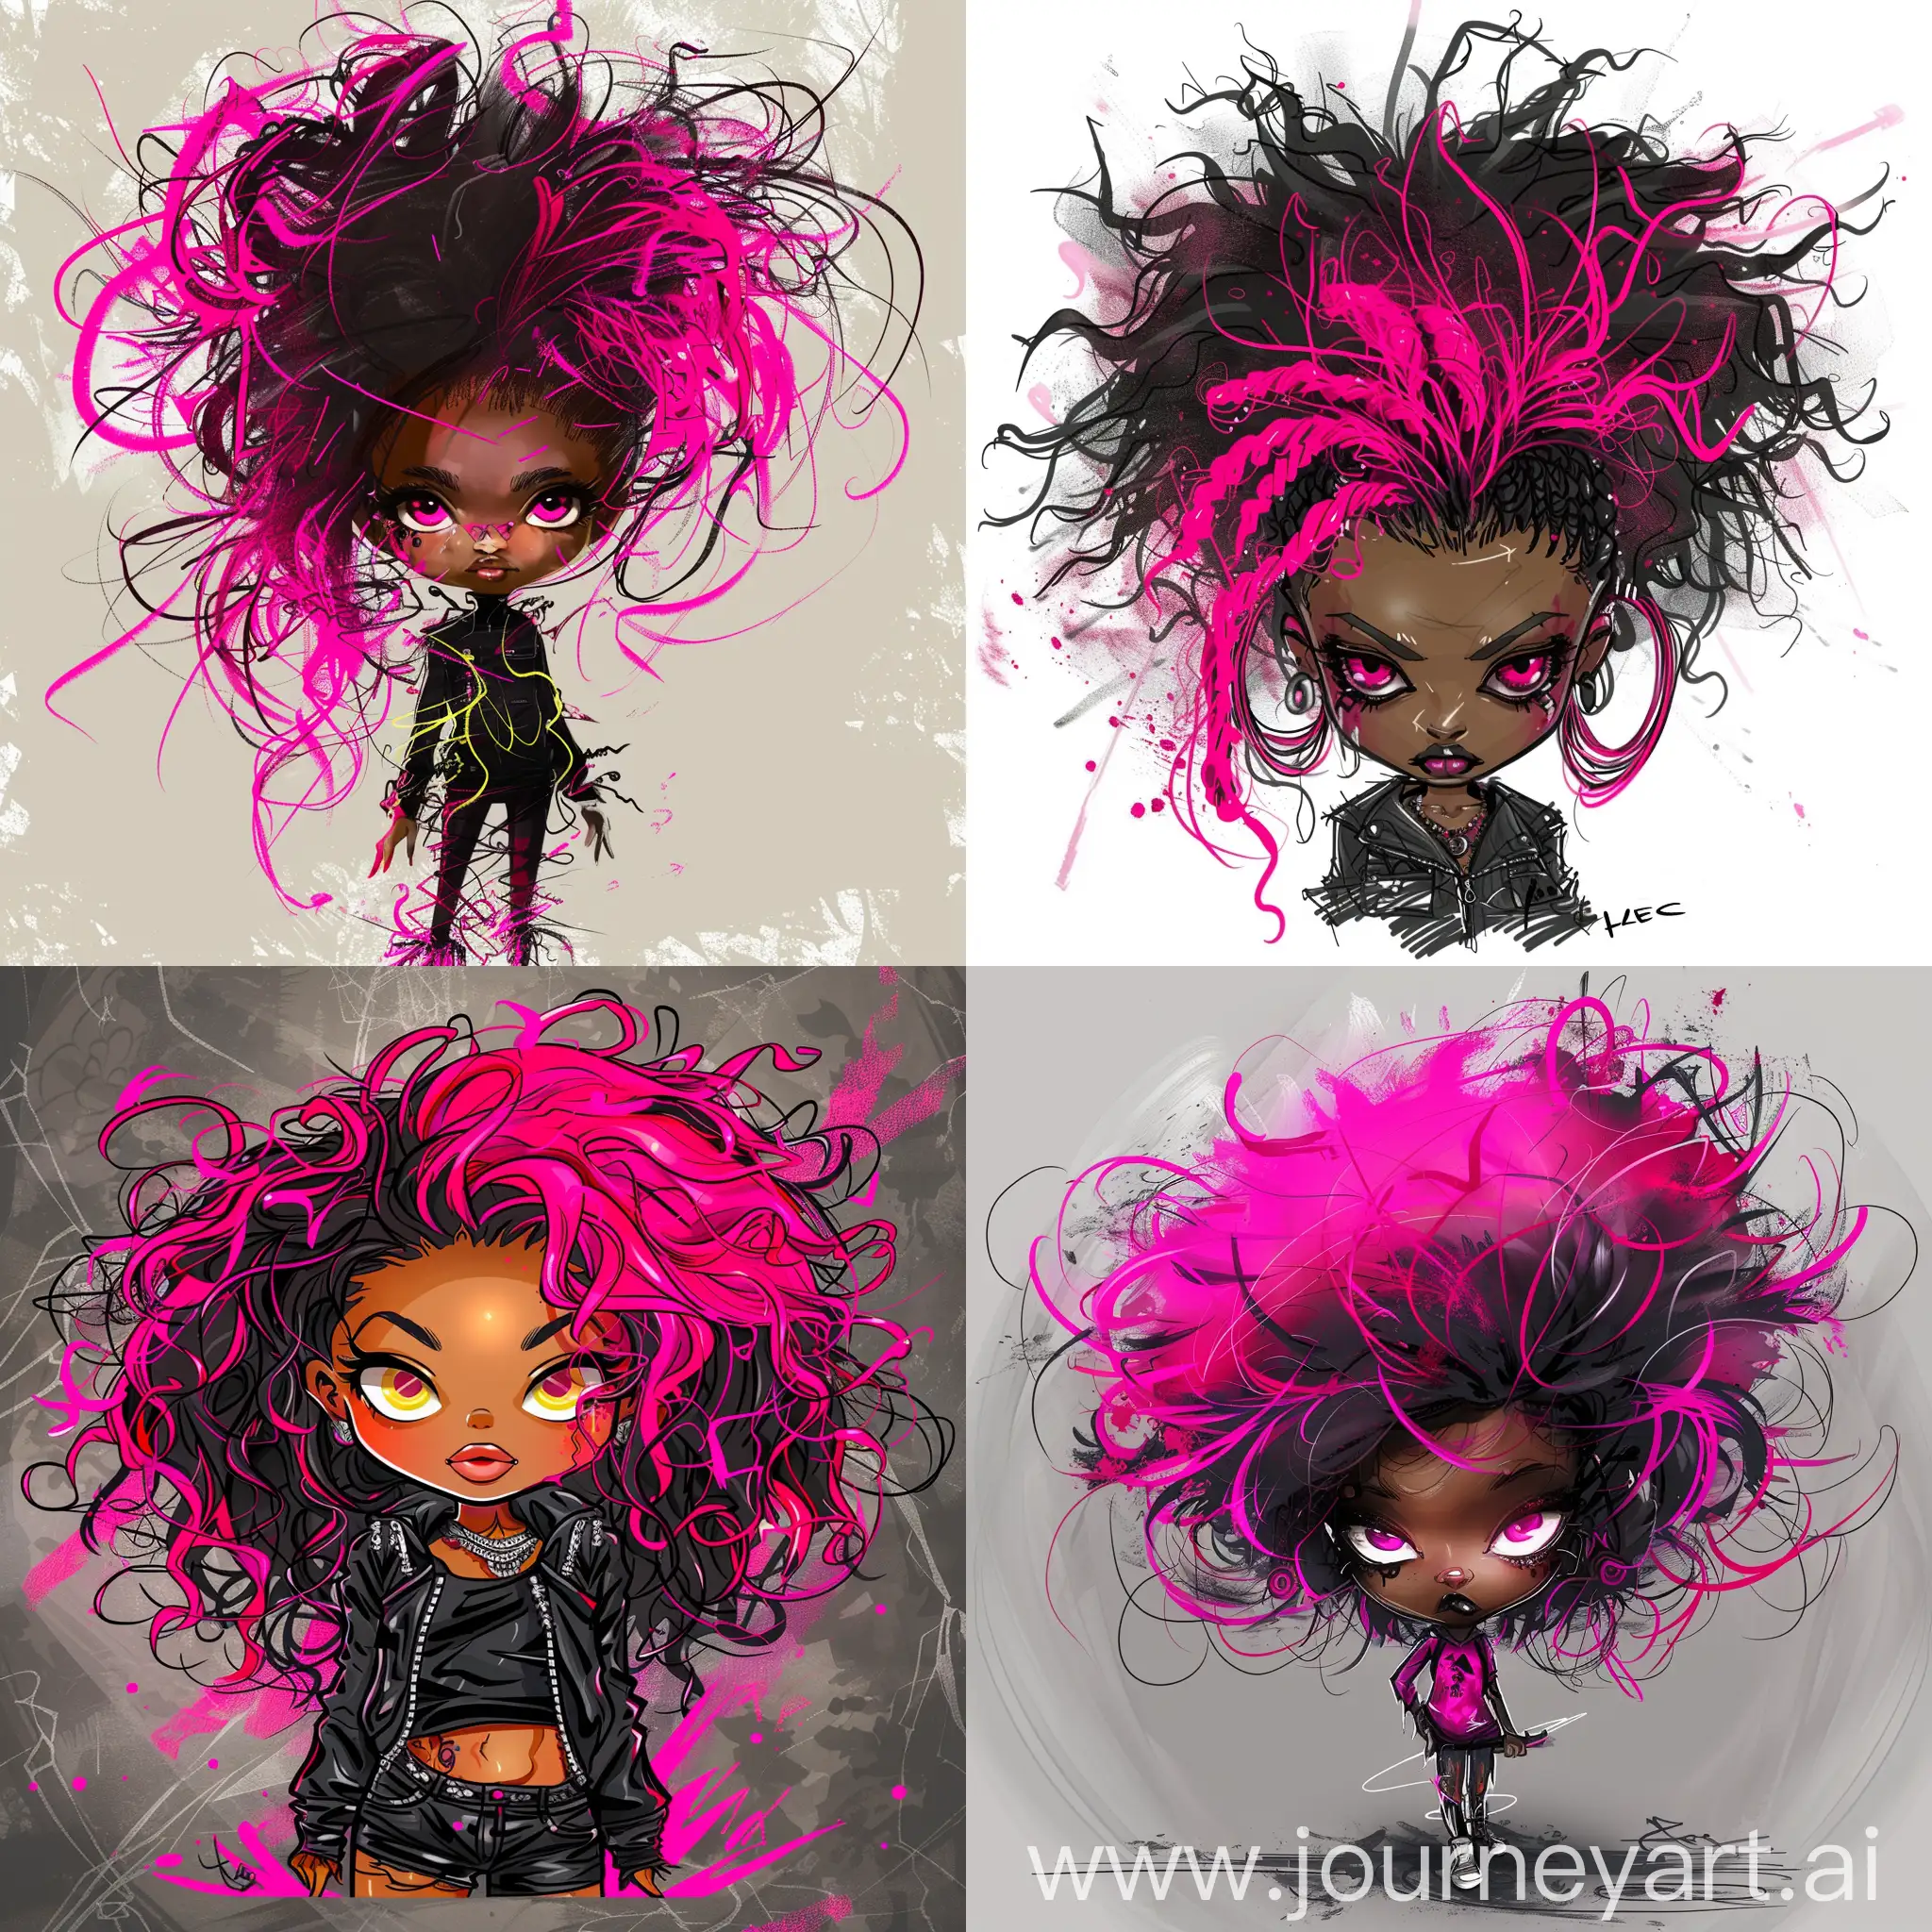 AA striking and edgy illustration of a sophisticated  25 yo chibi /boho ebony femail chibi boho  female punk rocker   with  neon pink very messy  hair. t